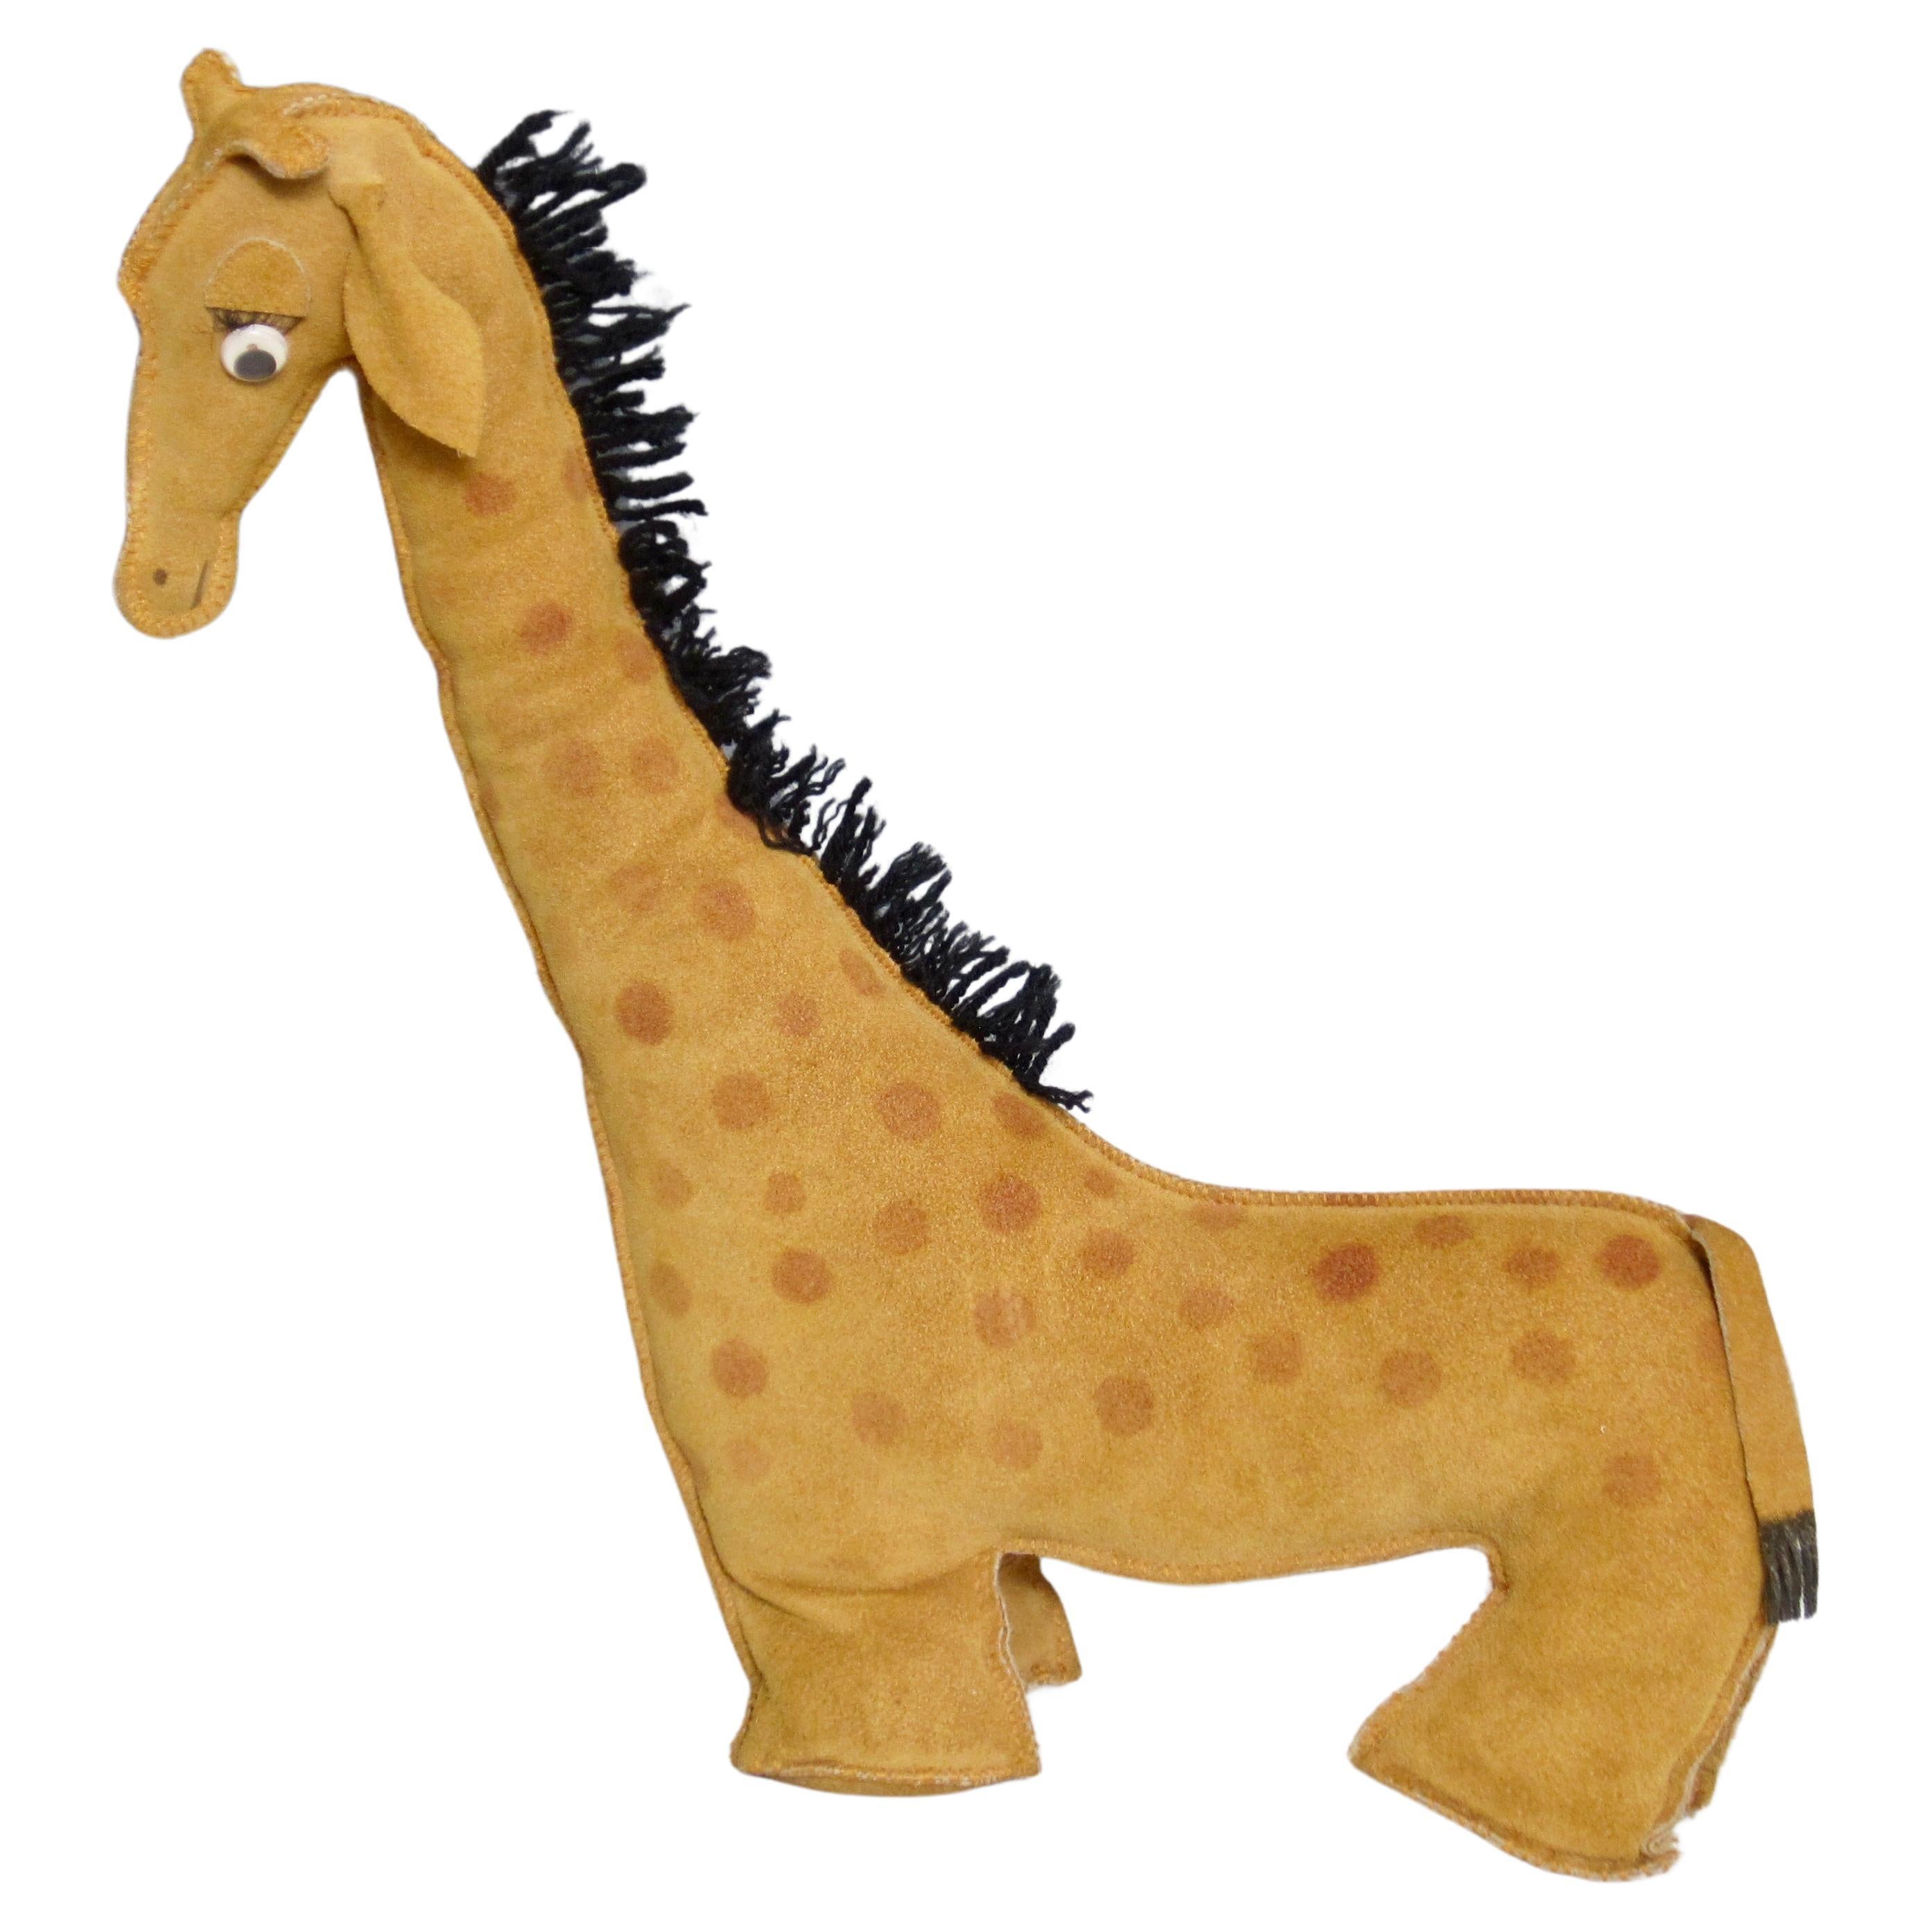 Folk Art Suede Leather Giraffe Stuffed Animal For Sale